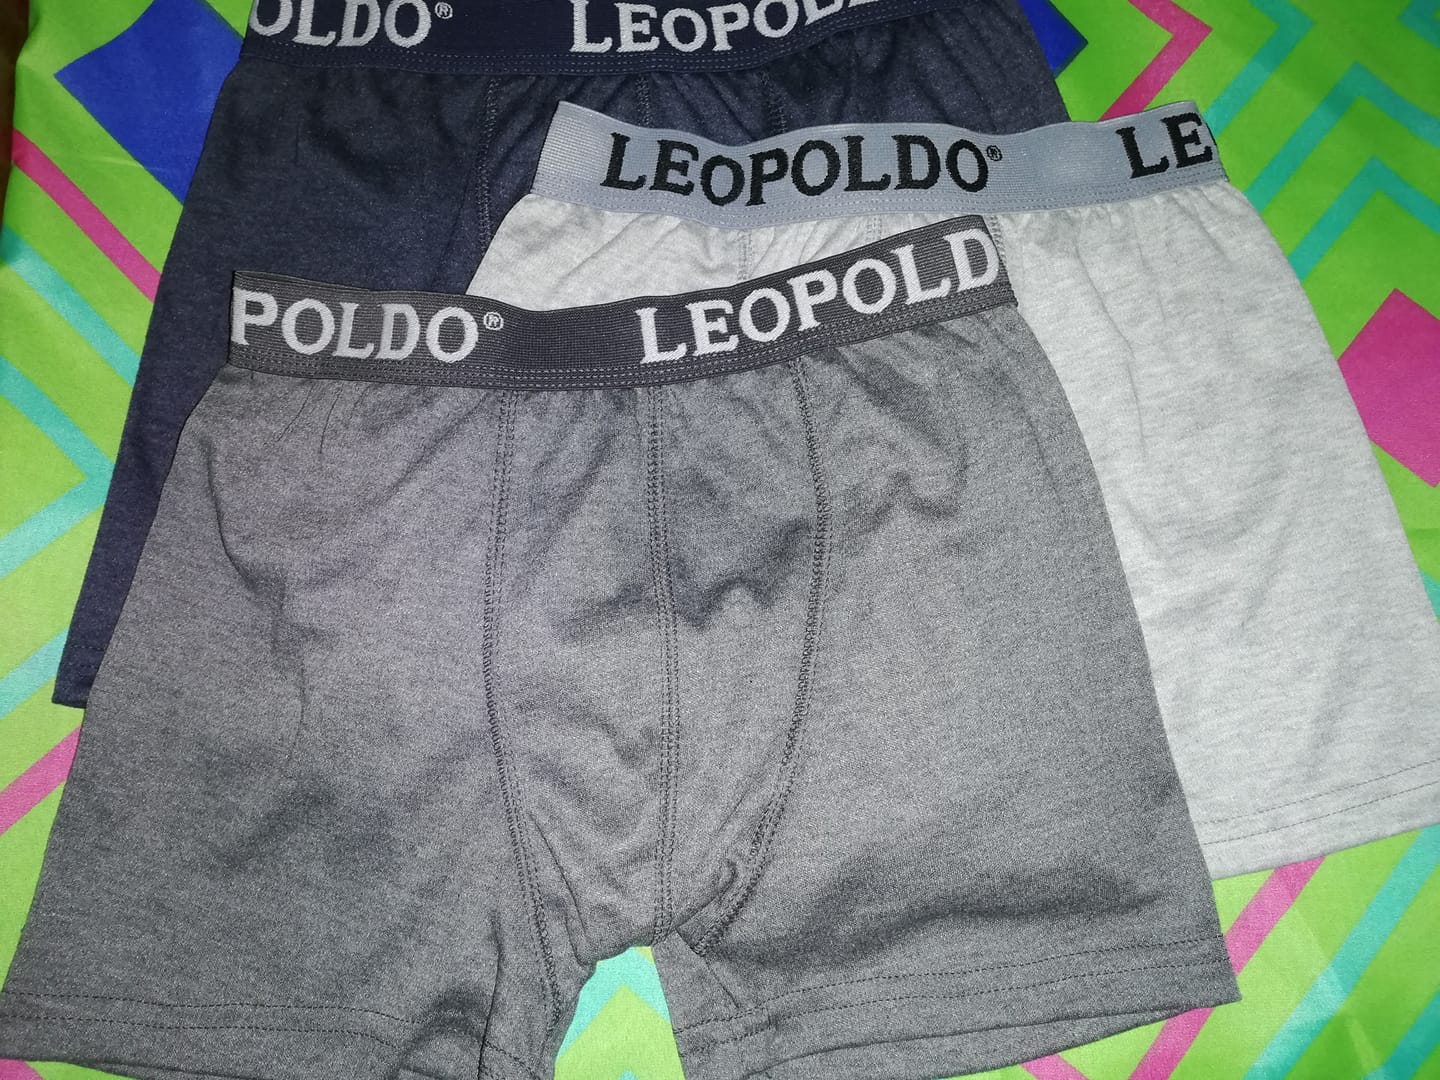 Leo Poldo Boxer Shorts Where To Buy In Store